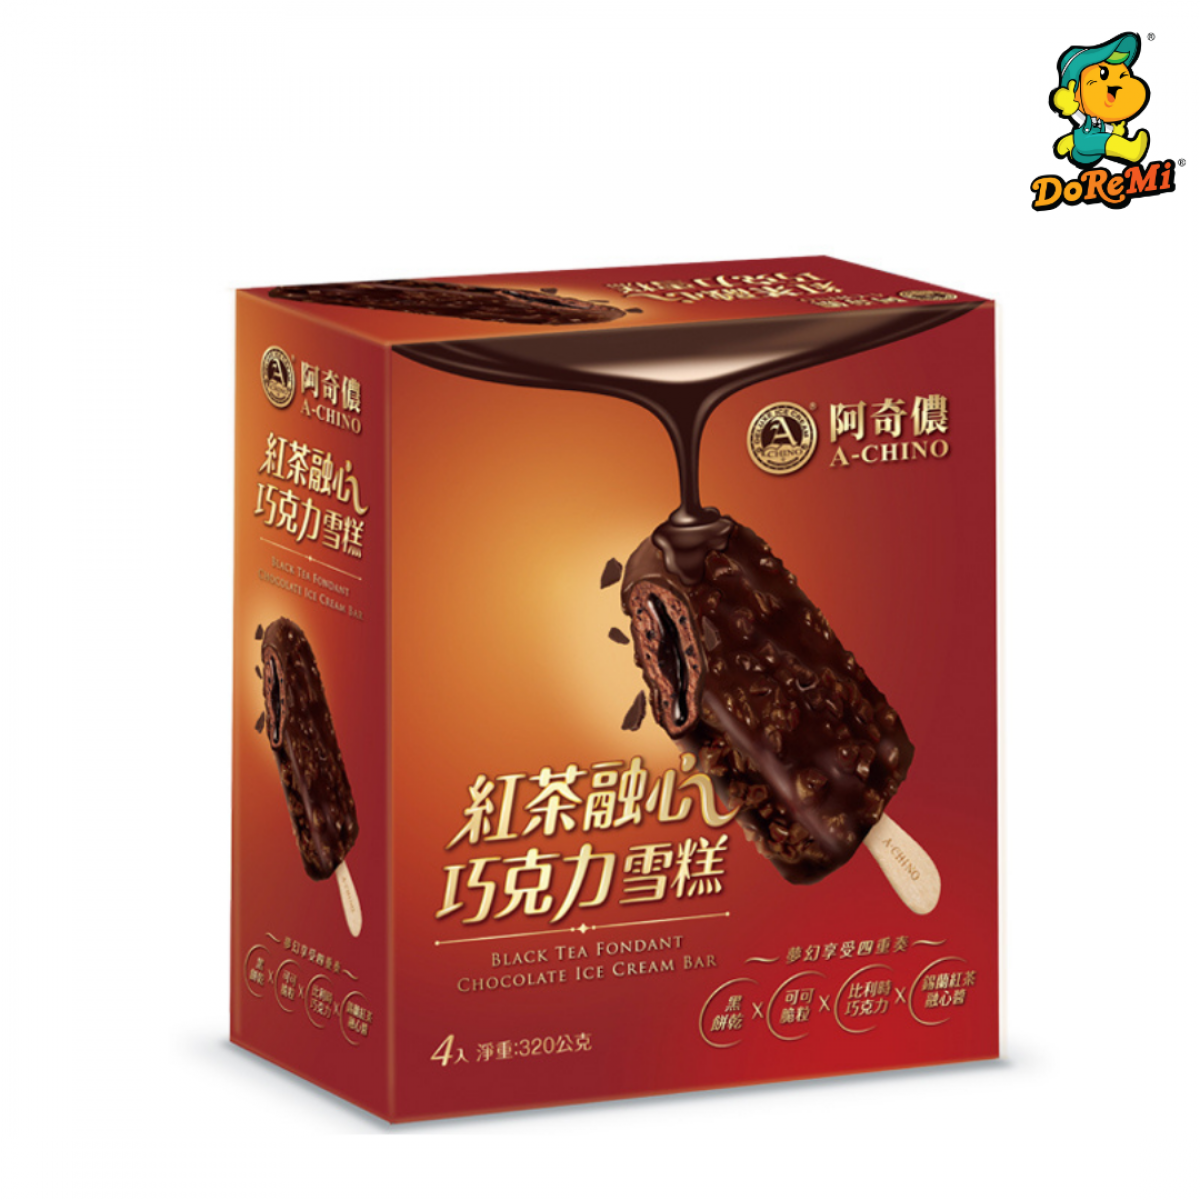 Black Tea Fondant Chocolate Ice Cream (4pcs/box)